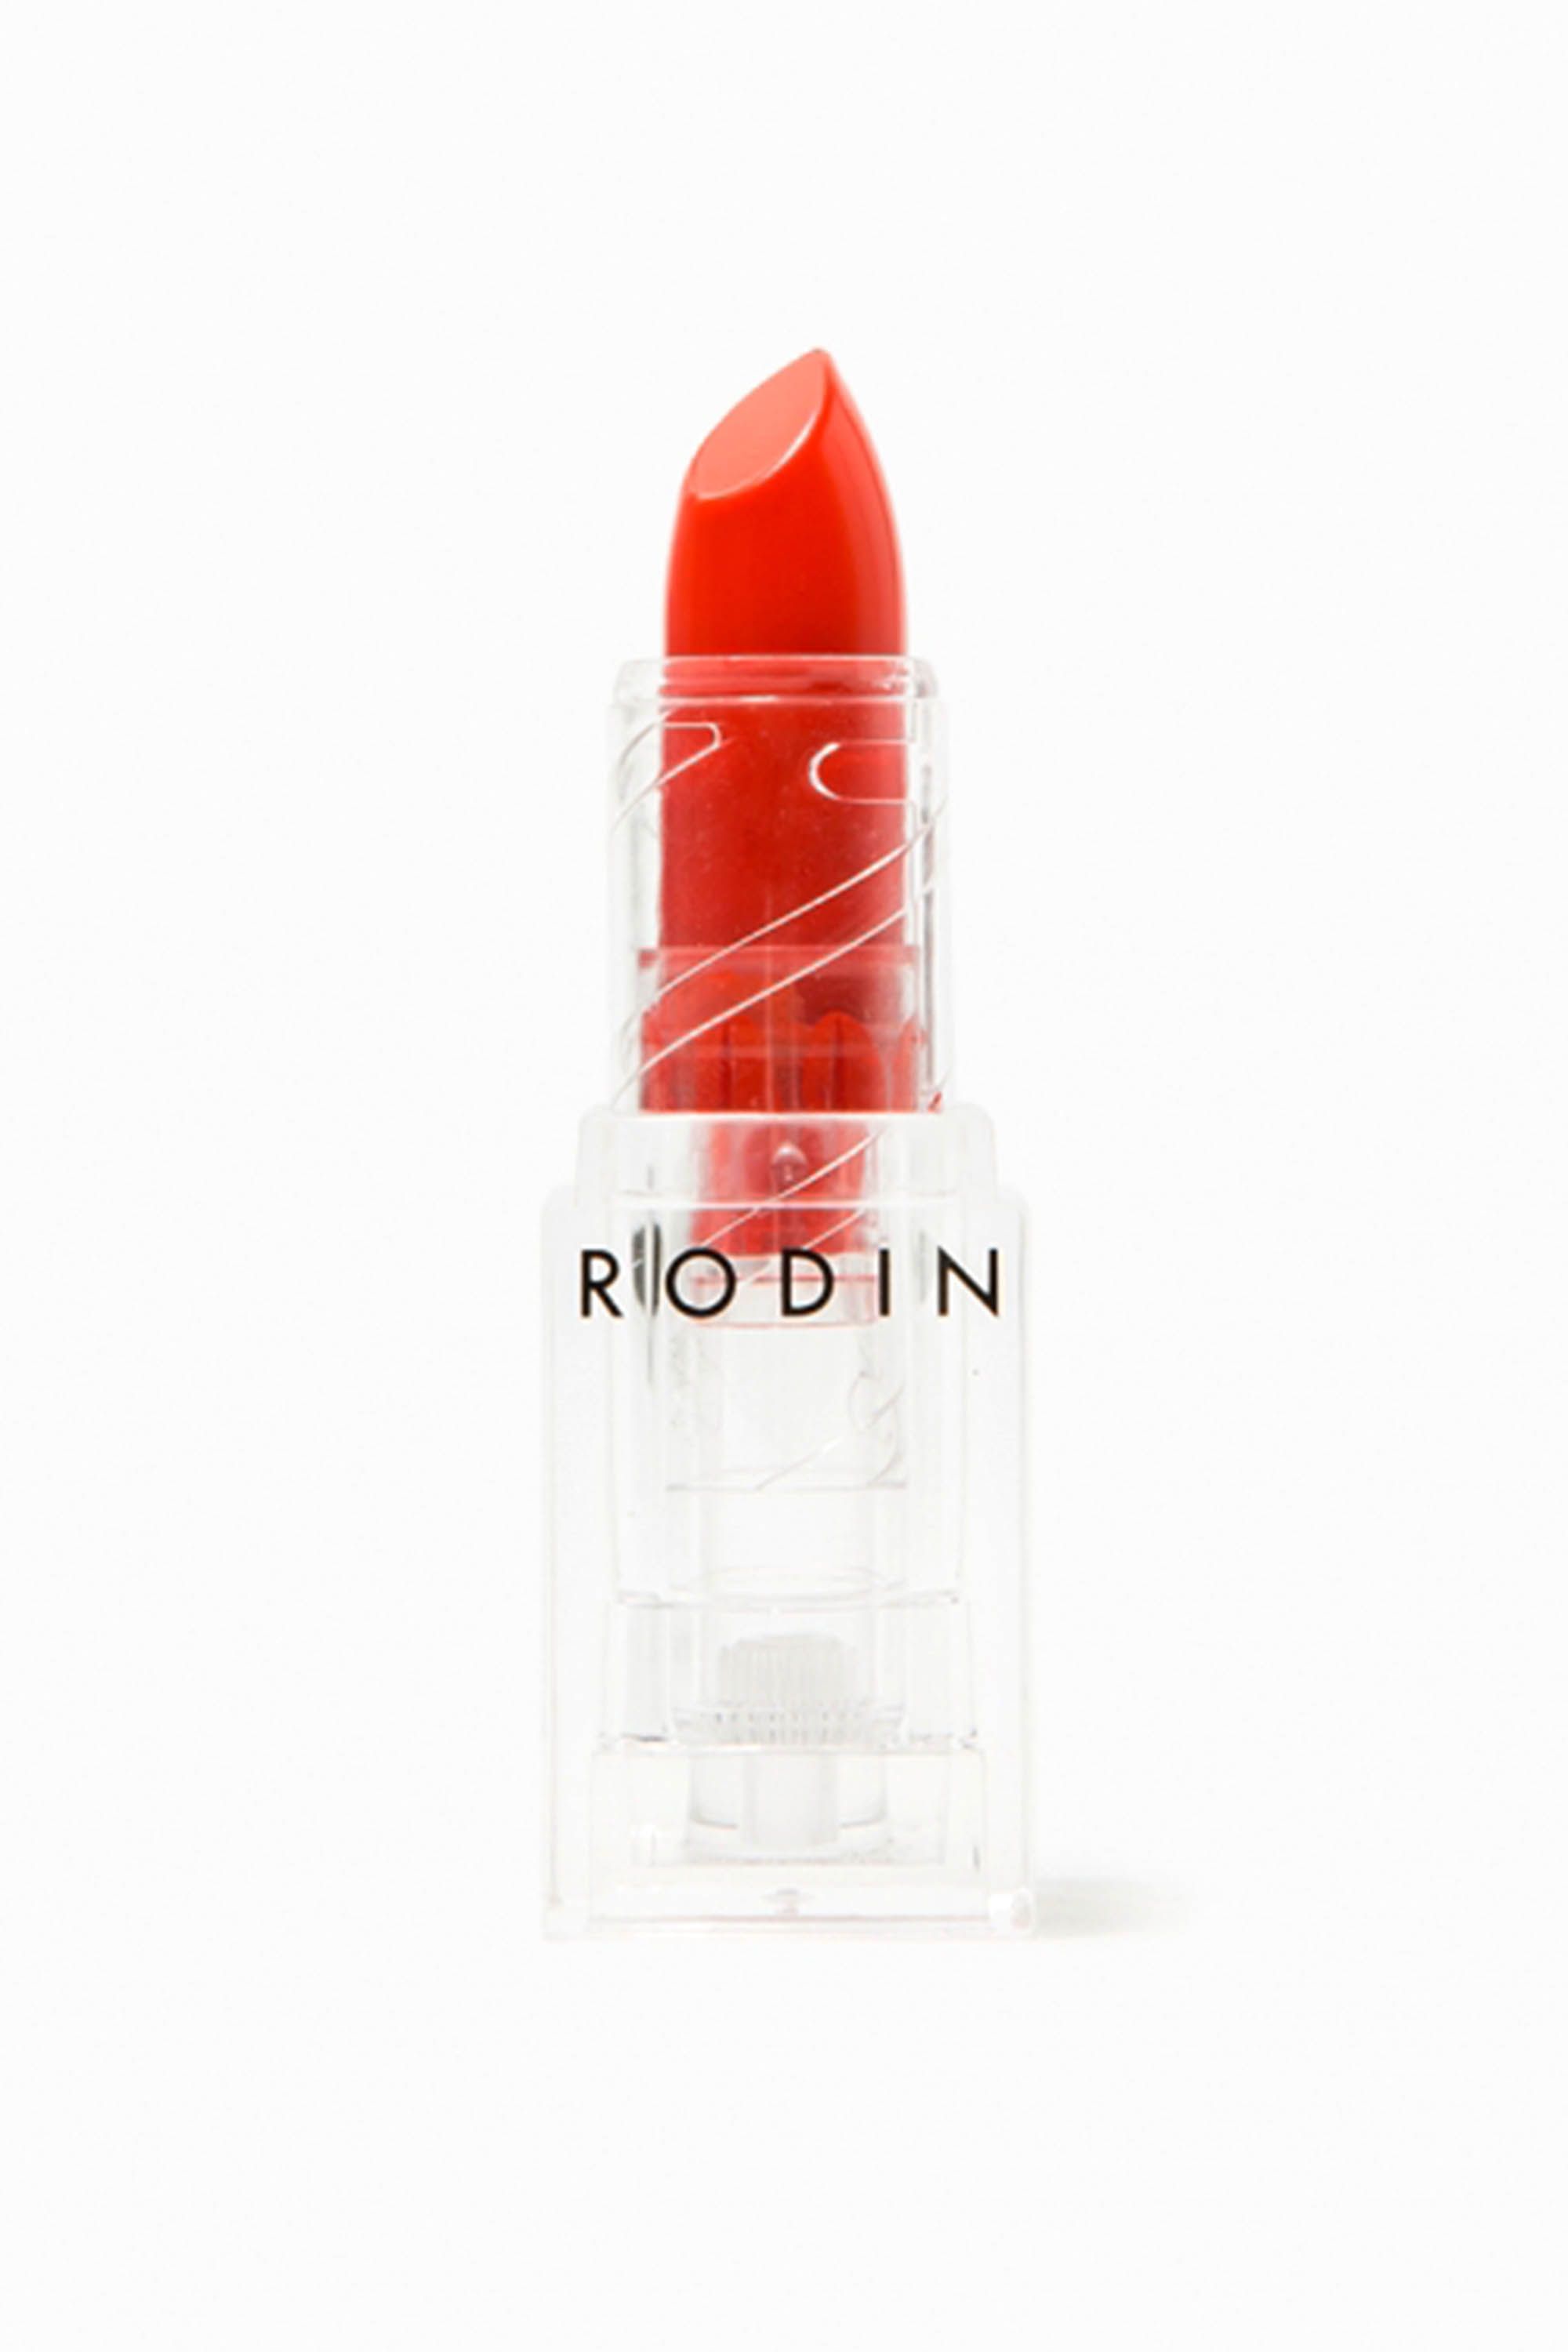 13 Orange Lipsticks for Every Complexion | Orange lipstick and Makeup